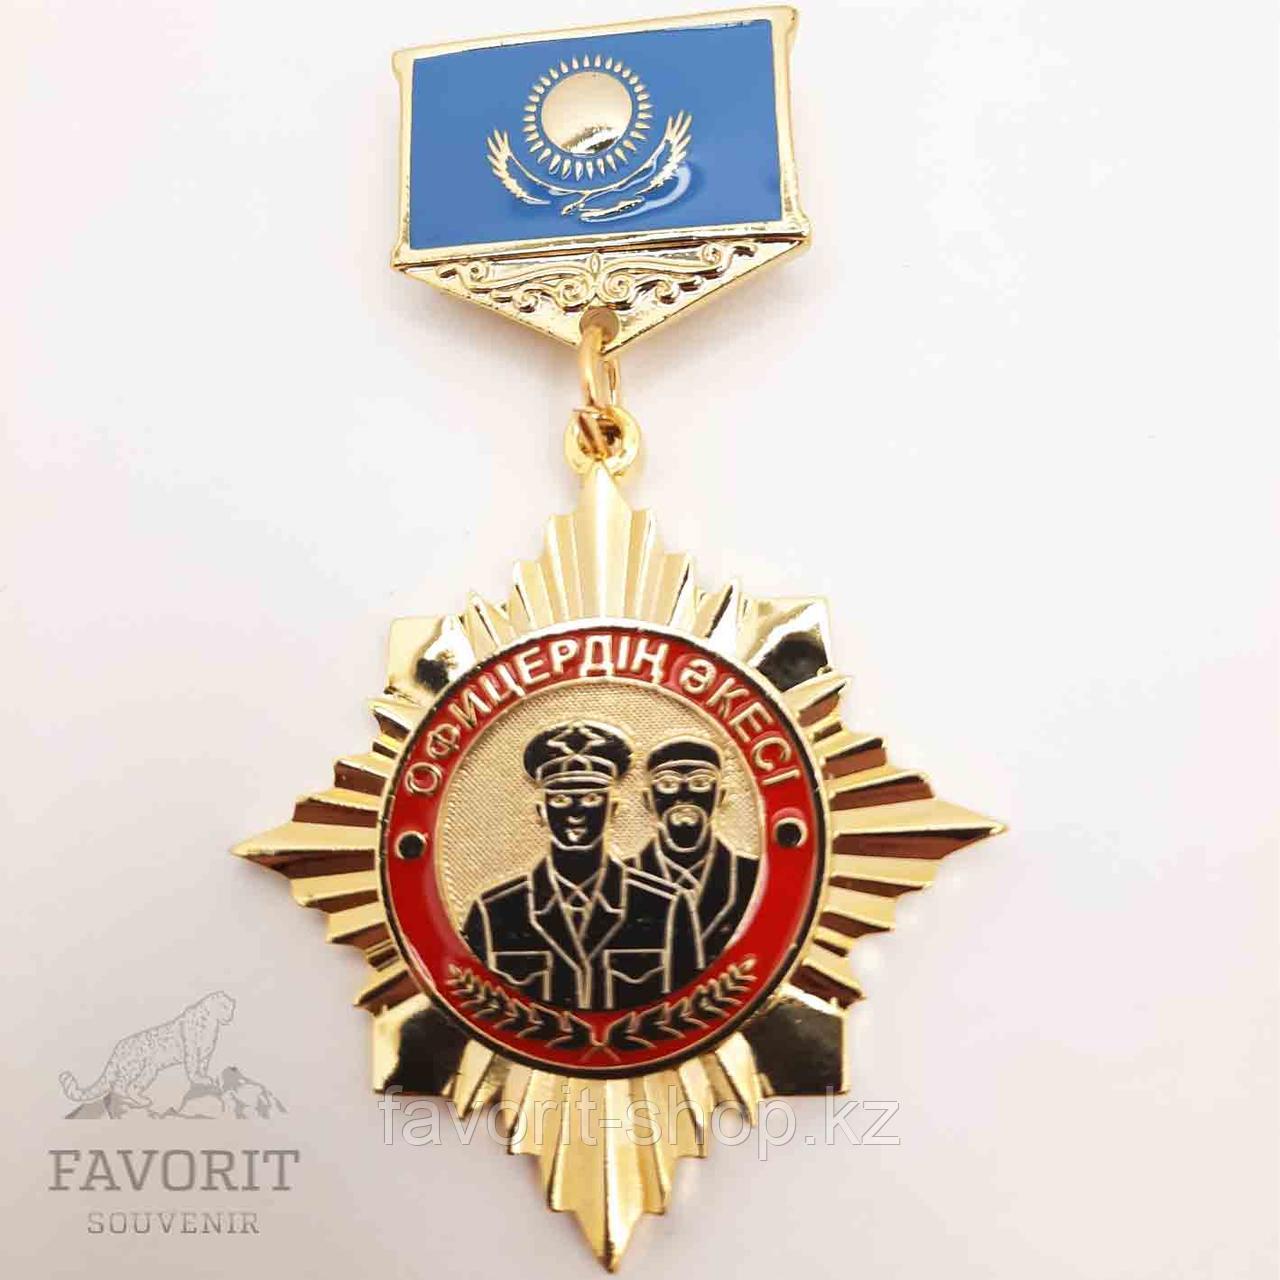 Медаль для папы офицера "Офицердің Әкесі"